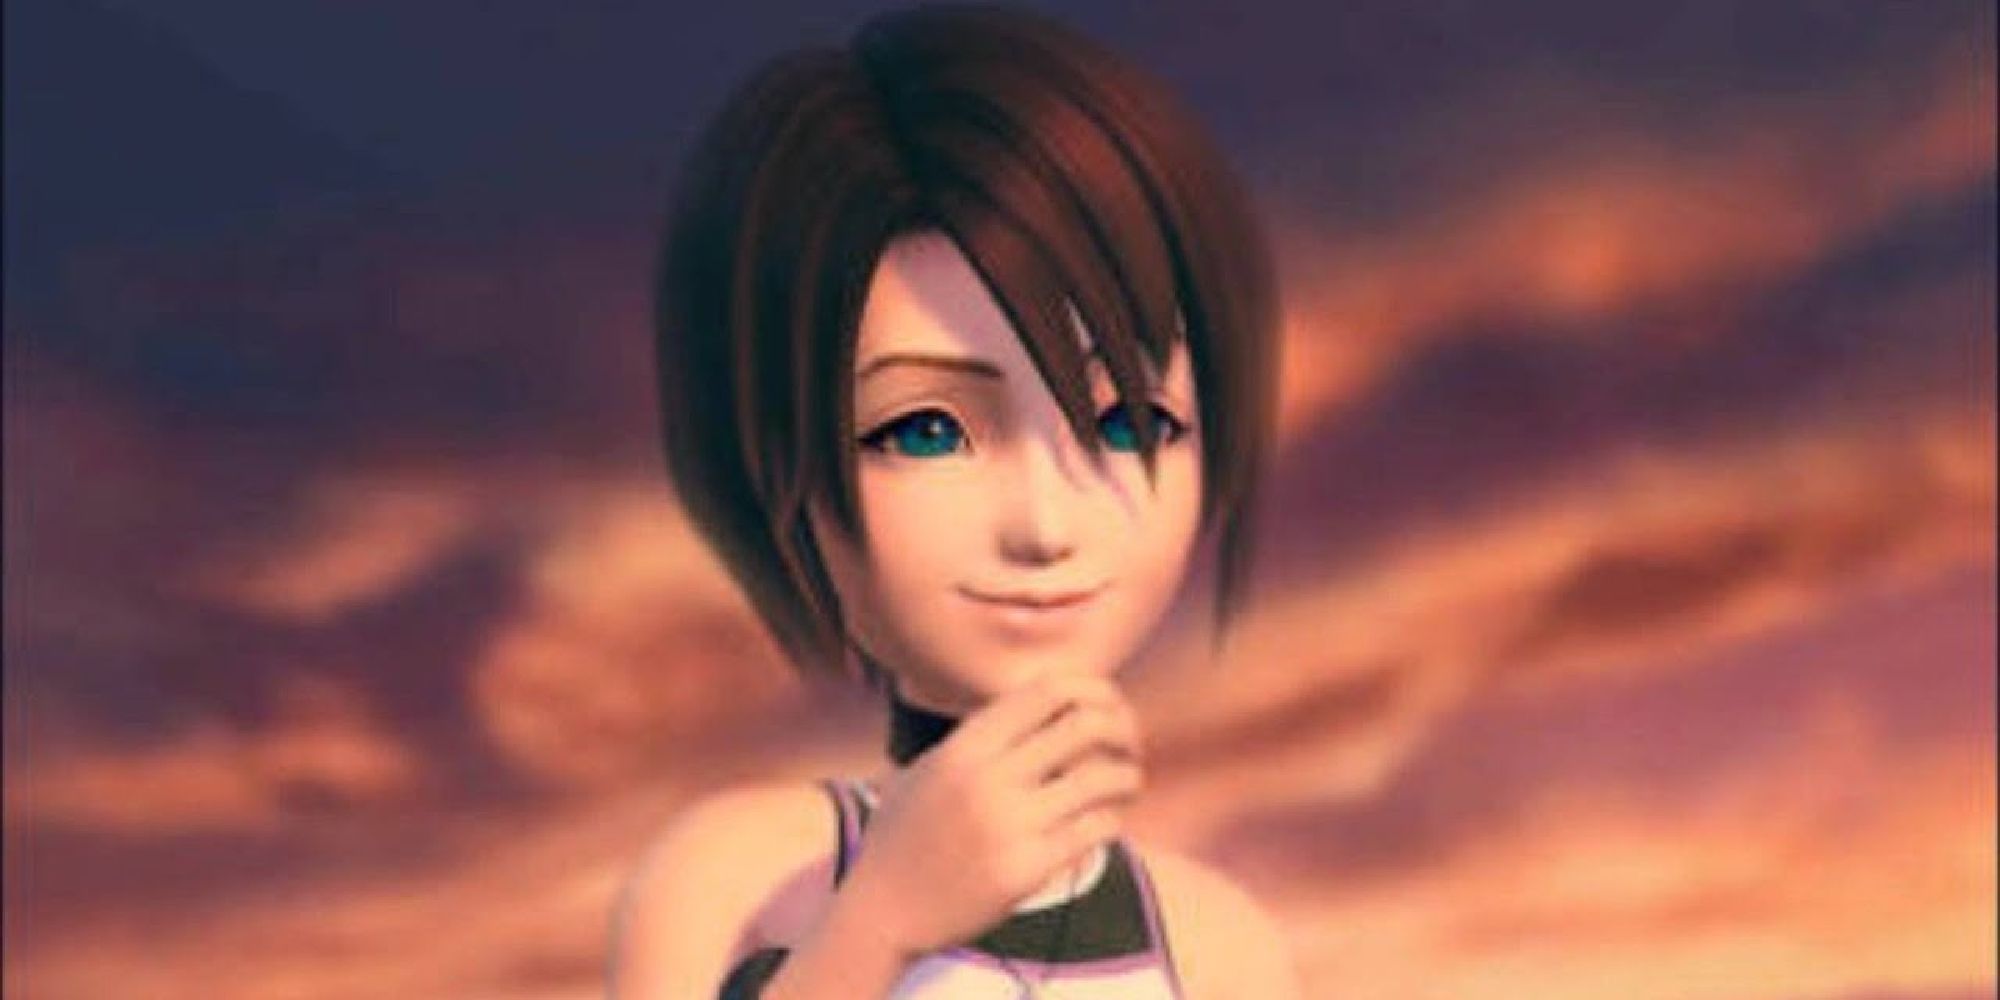 Kairi smiling during a sunset in a Kingdom Hearts cutscene